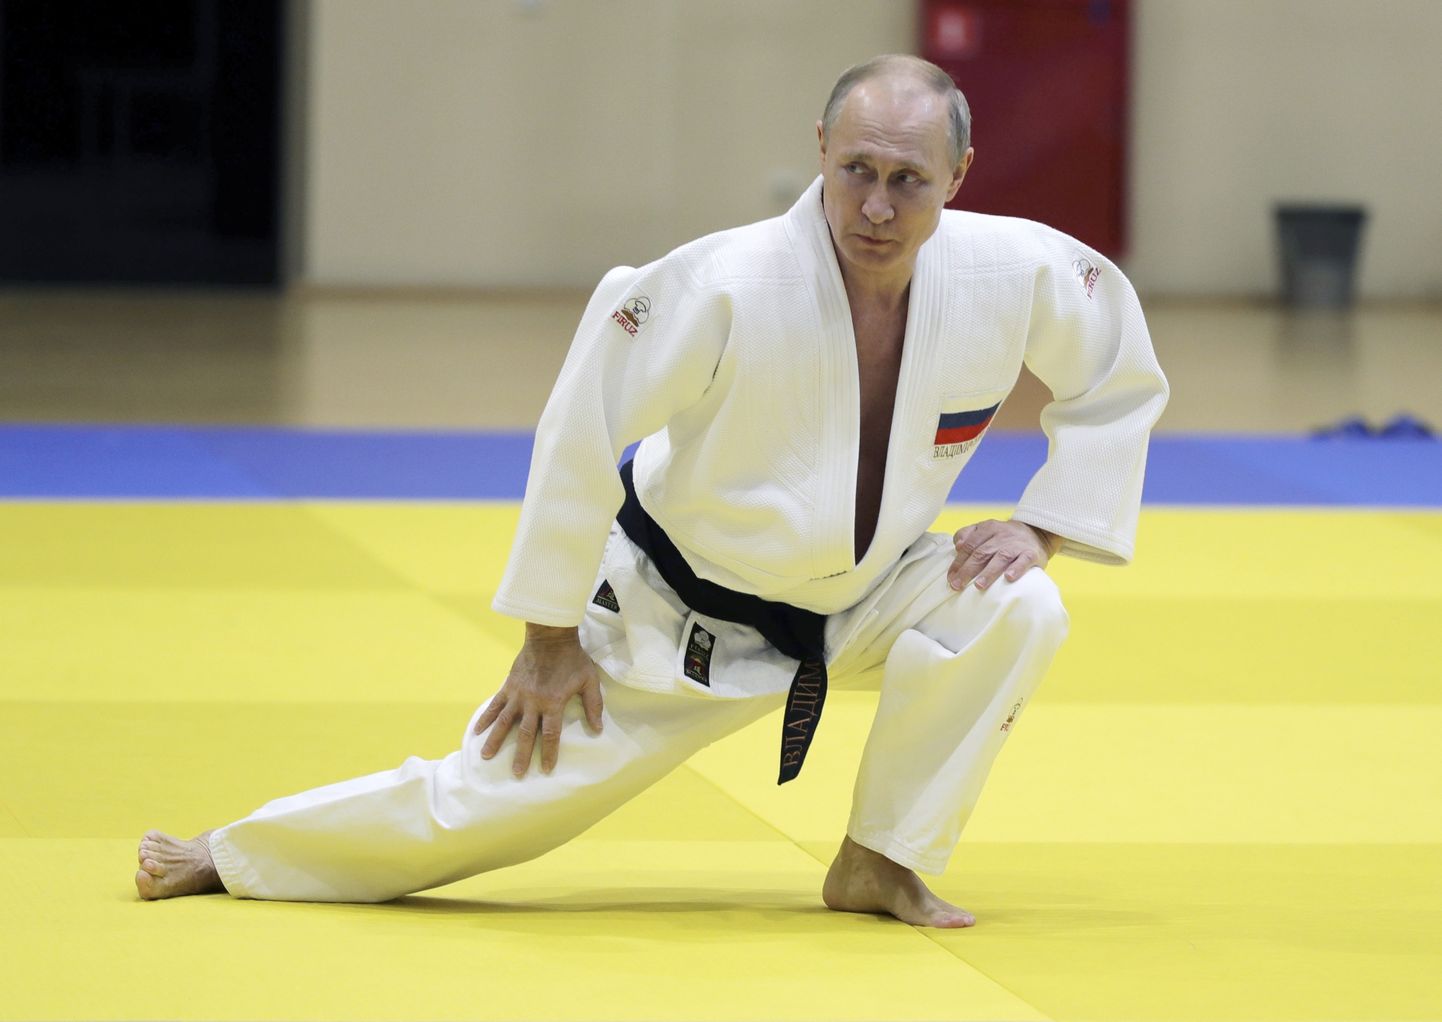 Venemaa president Vladimir Putin 14. veebruaril 2019 judotreeningul Jug-Sporti spordikesukses Sotšis